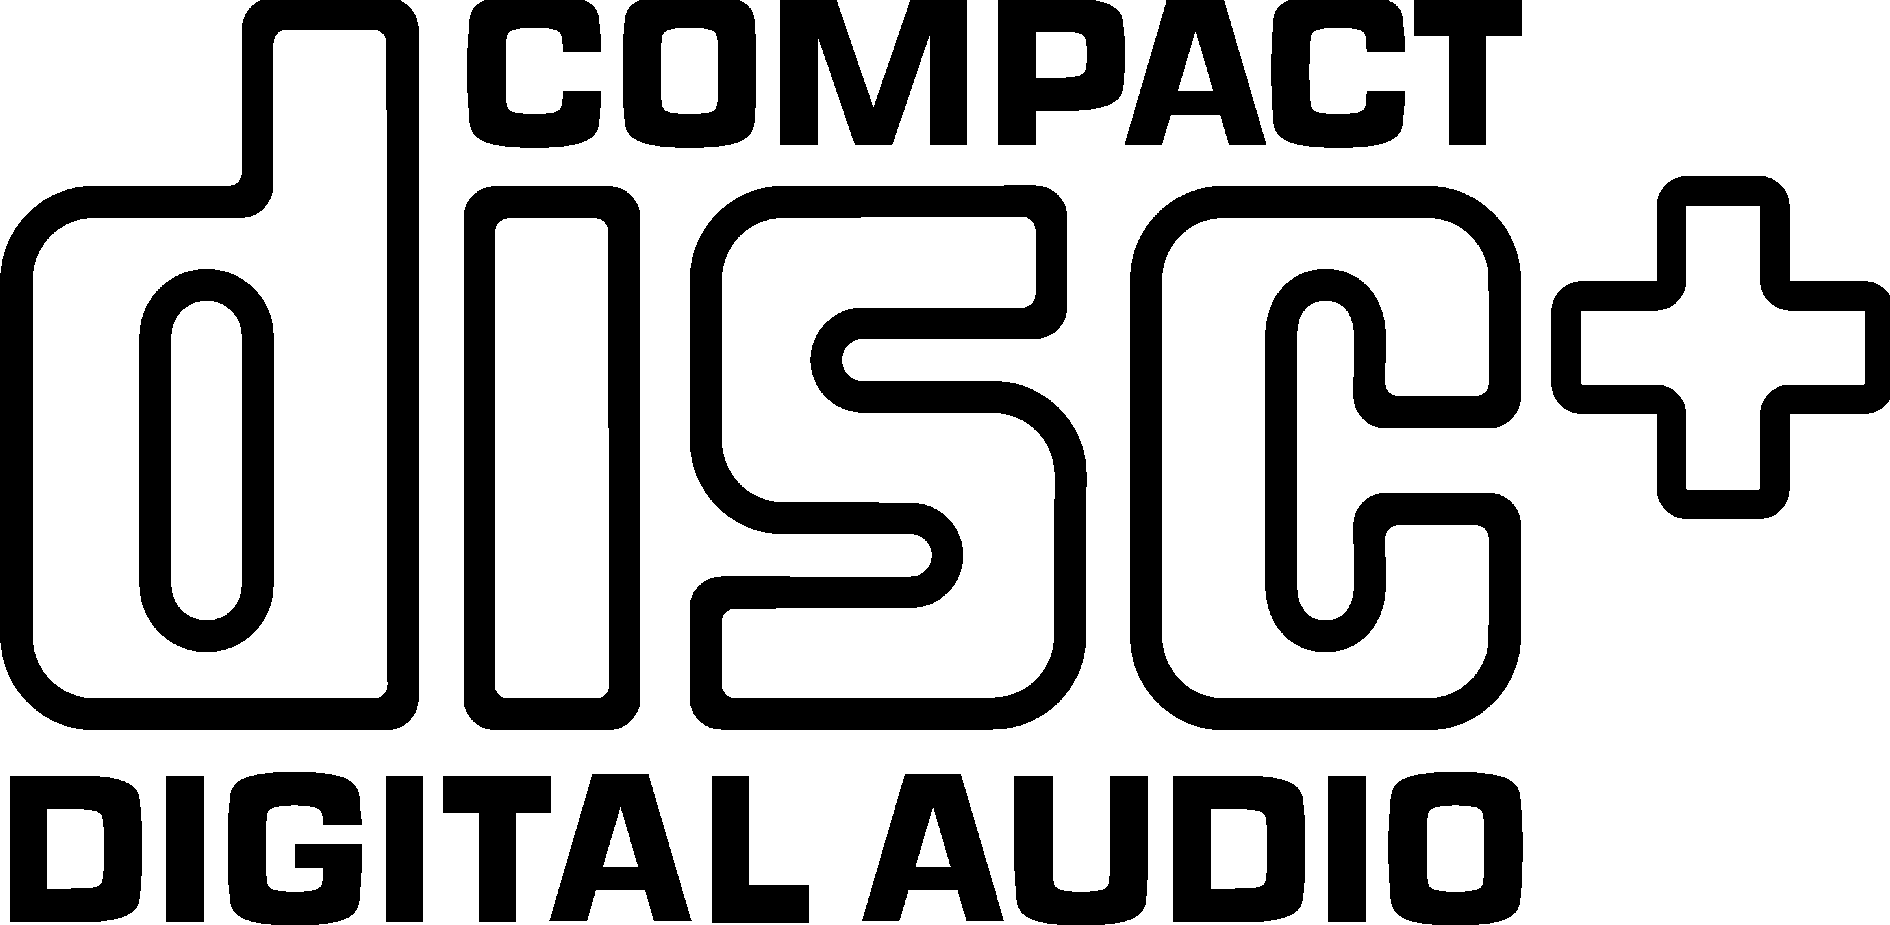 Compact disc logo, EPS | SVG 